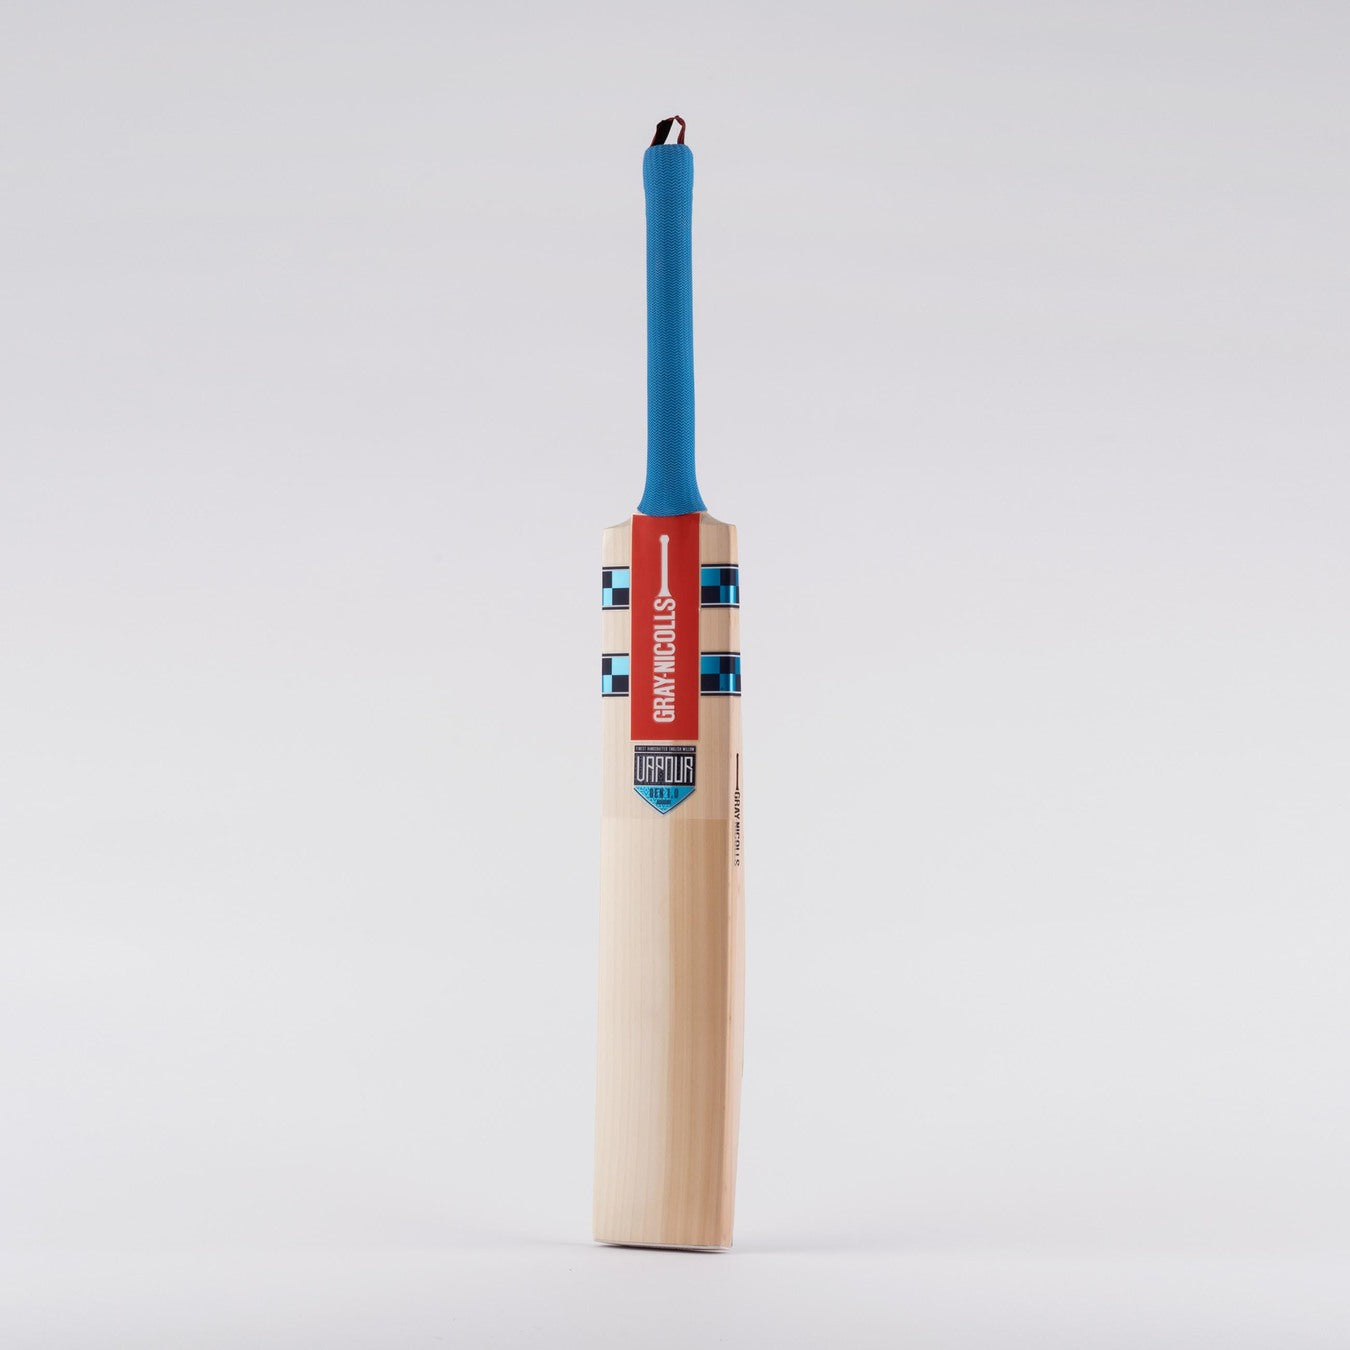 Gray Nicolls Cricket Bat, Model Vapour Gen 1.0 200, English Willow, PP